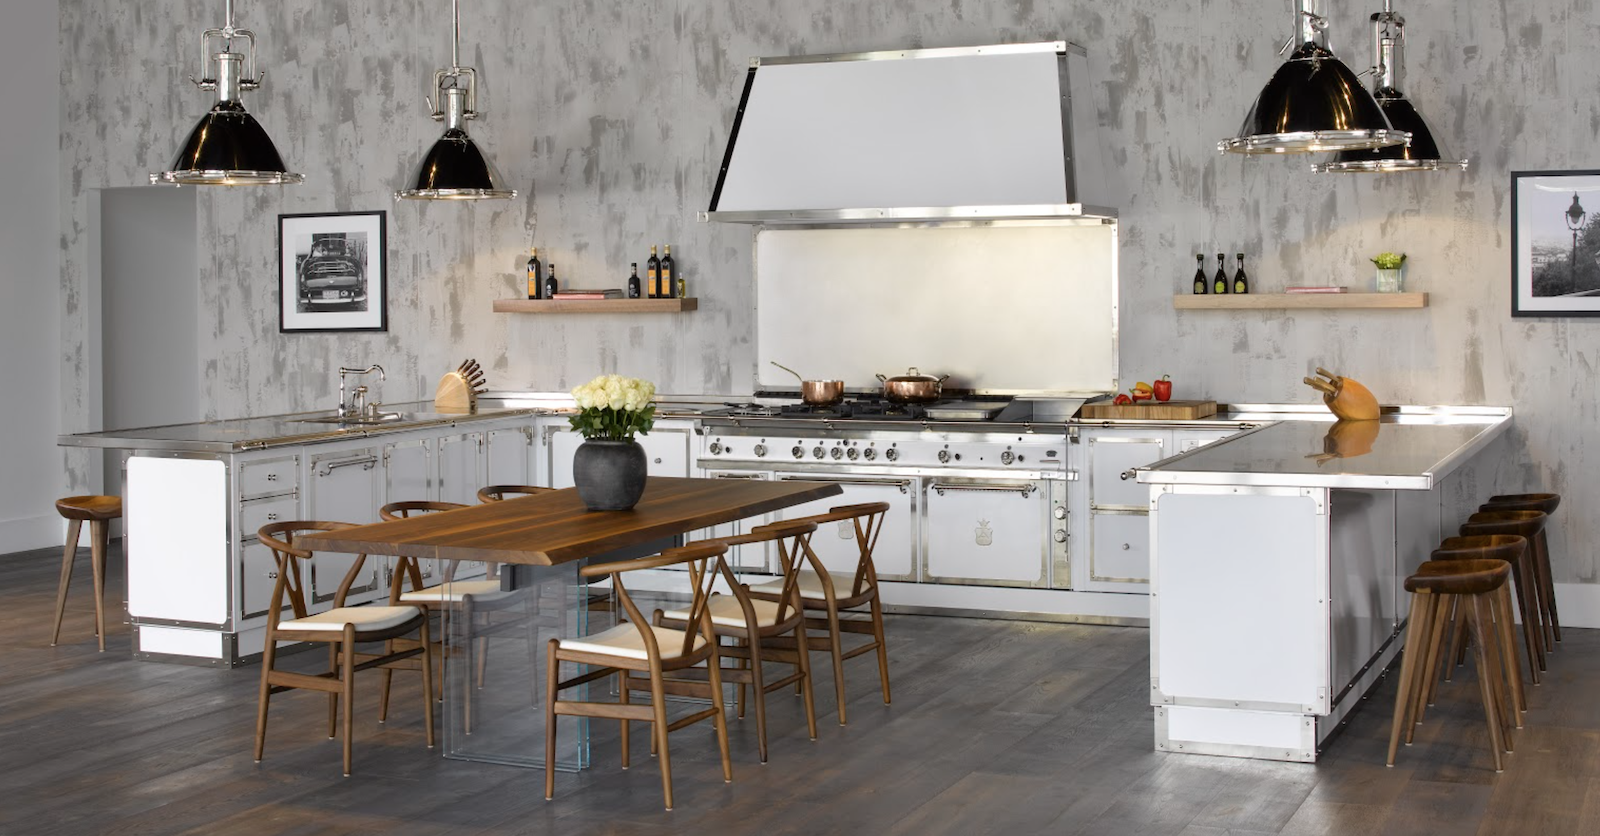 Custom kitchen design in white, Officine Gullo 